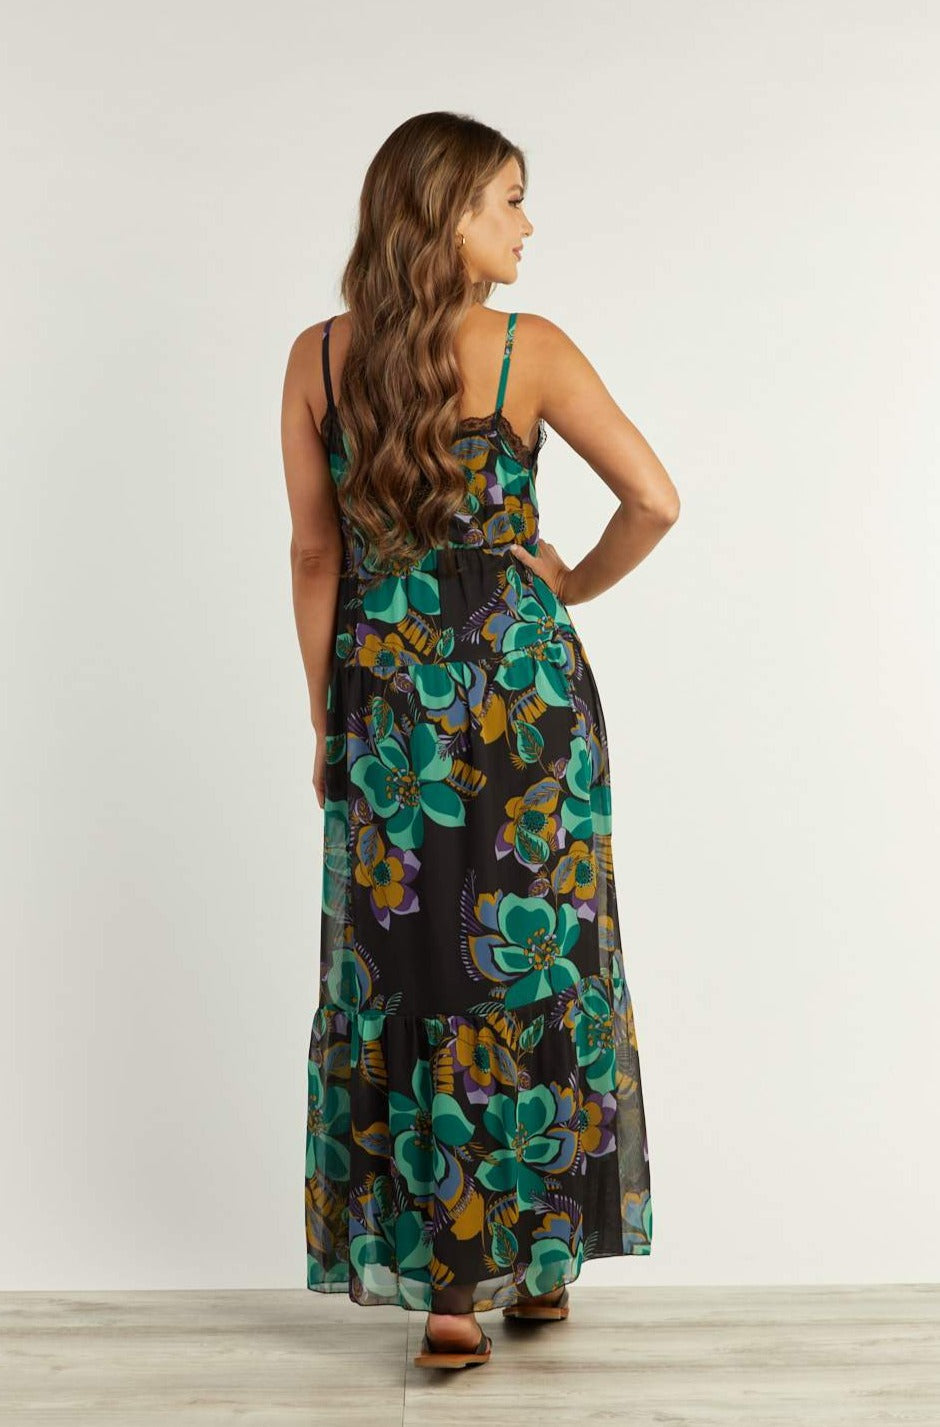 AnnaCristy Milano DRESSES Amy Chiffon Floral Print Tiered Maxi Dress